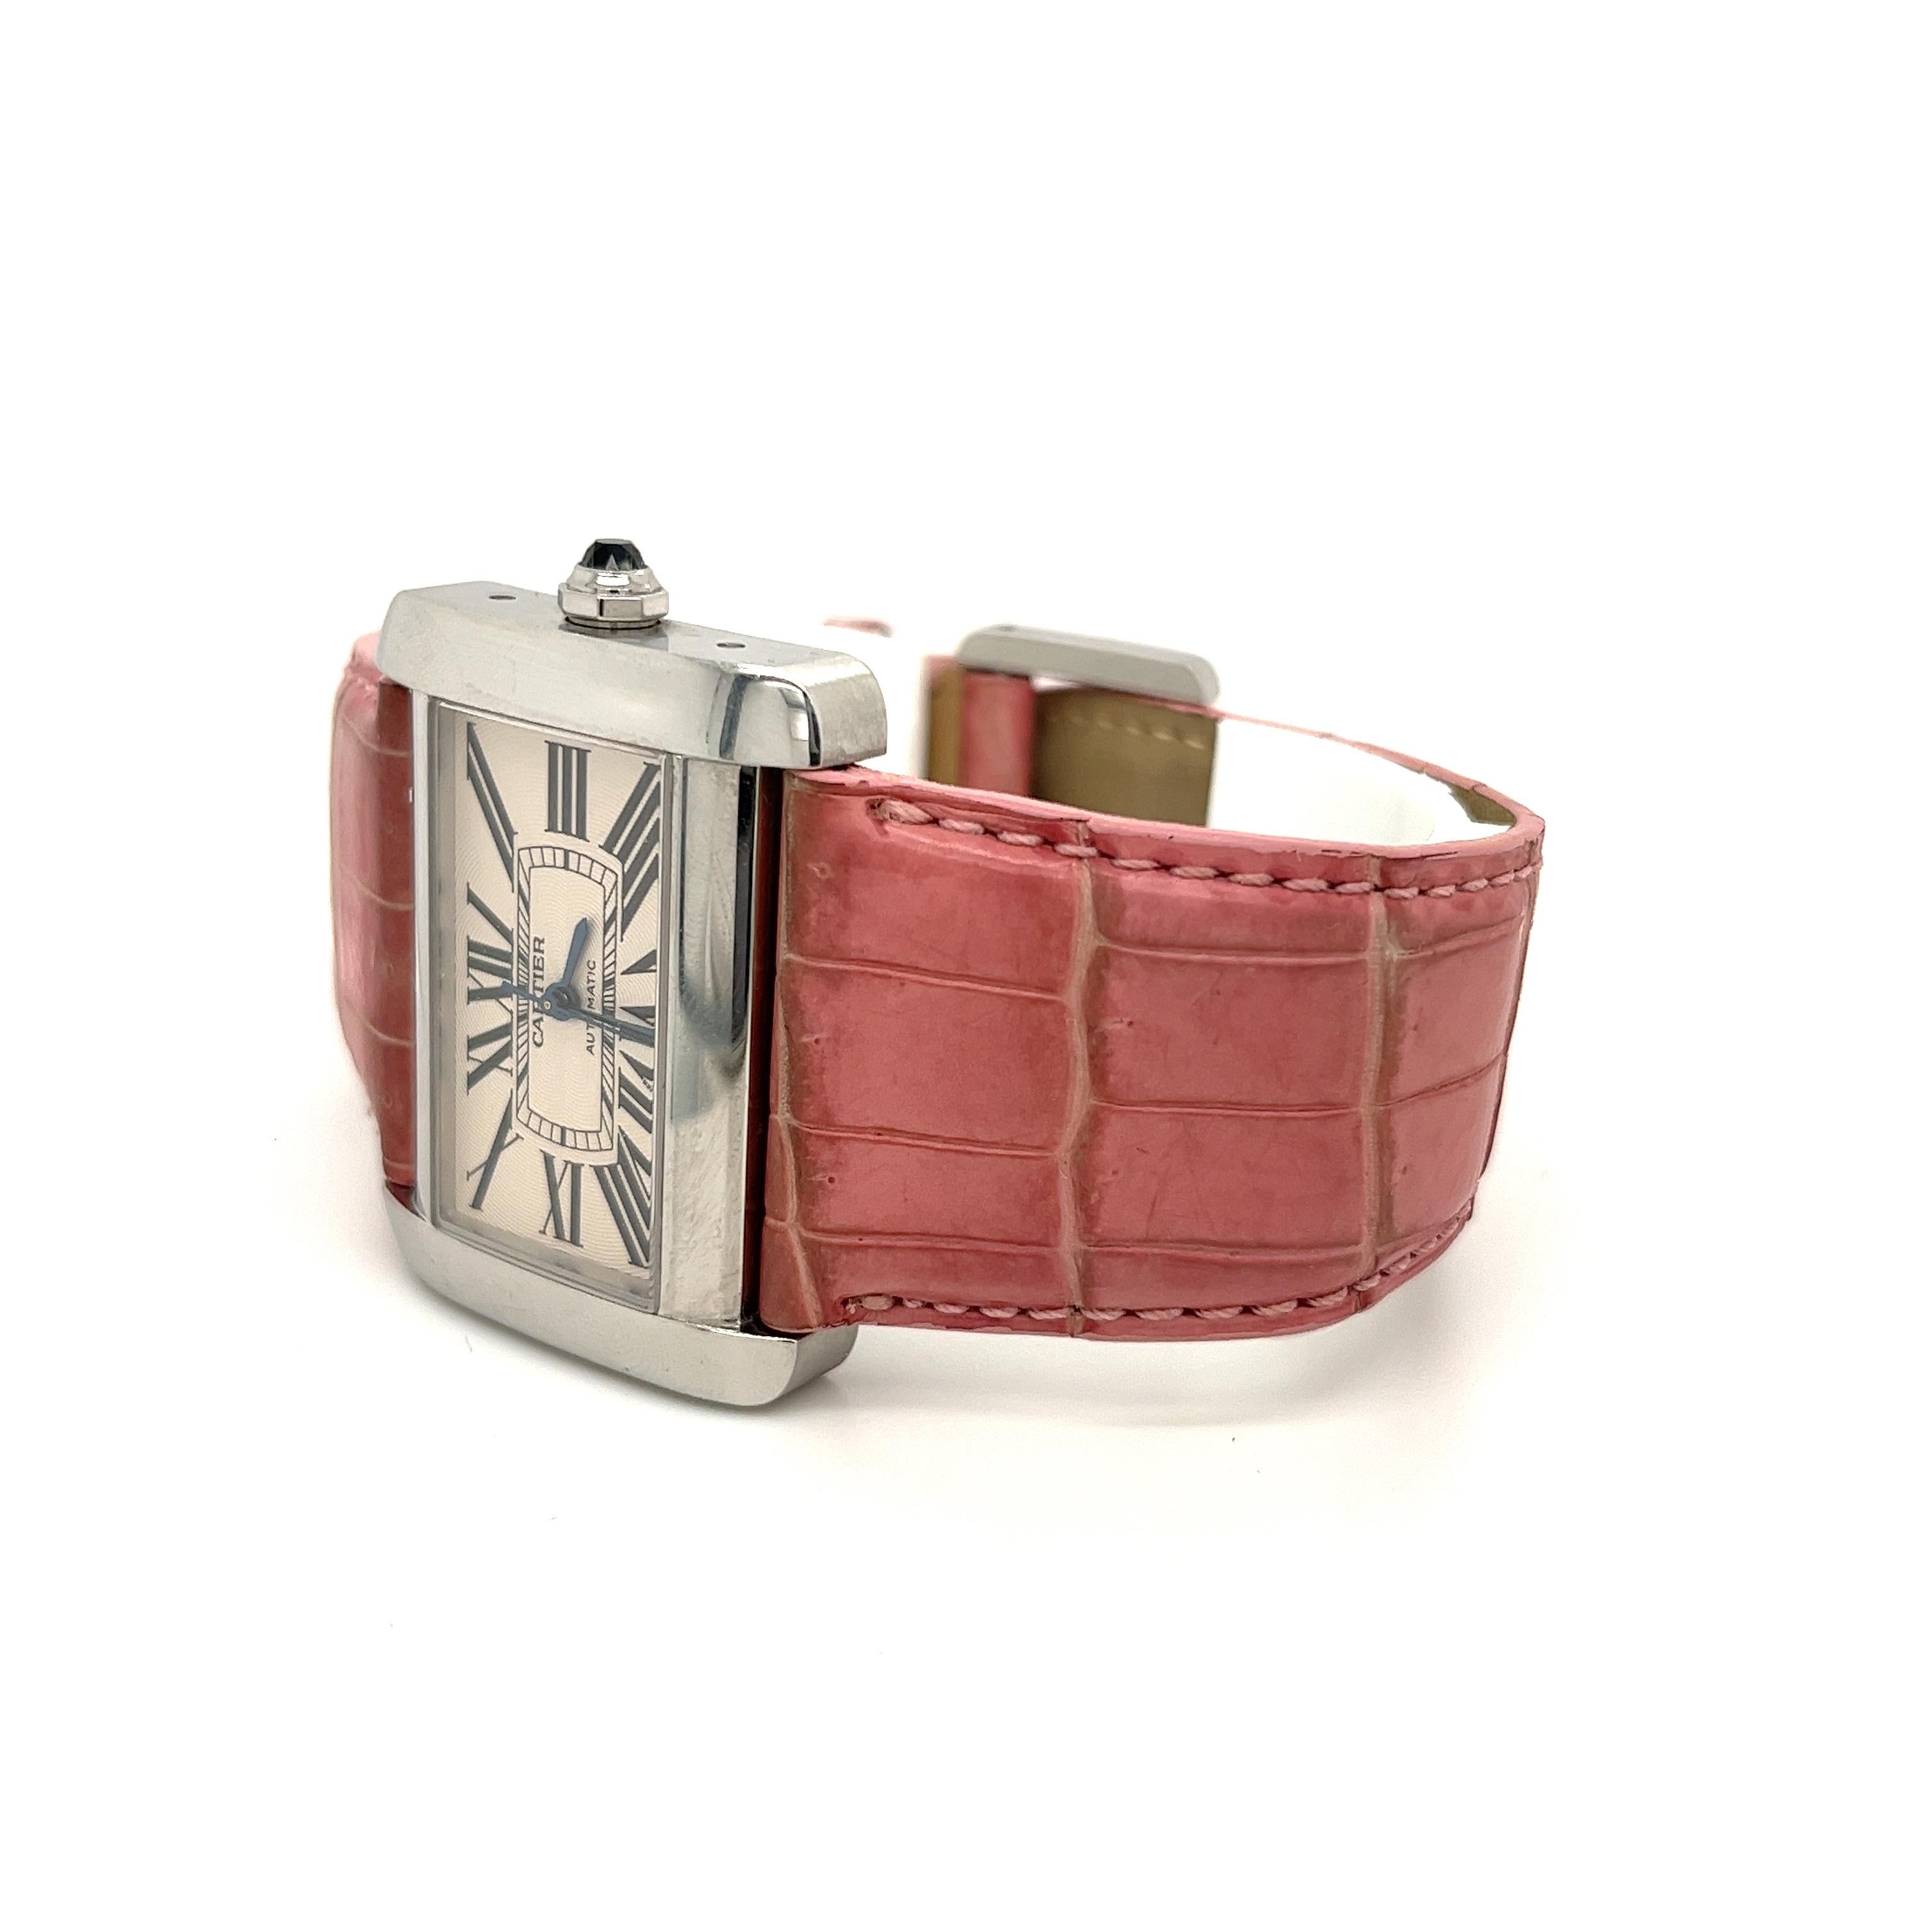 Vintage Cartier Divan 2612 Ladies Wrist Watch W/ Pink Leather Strap For Sale 2